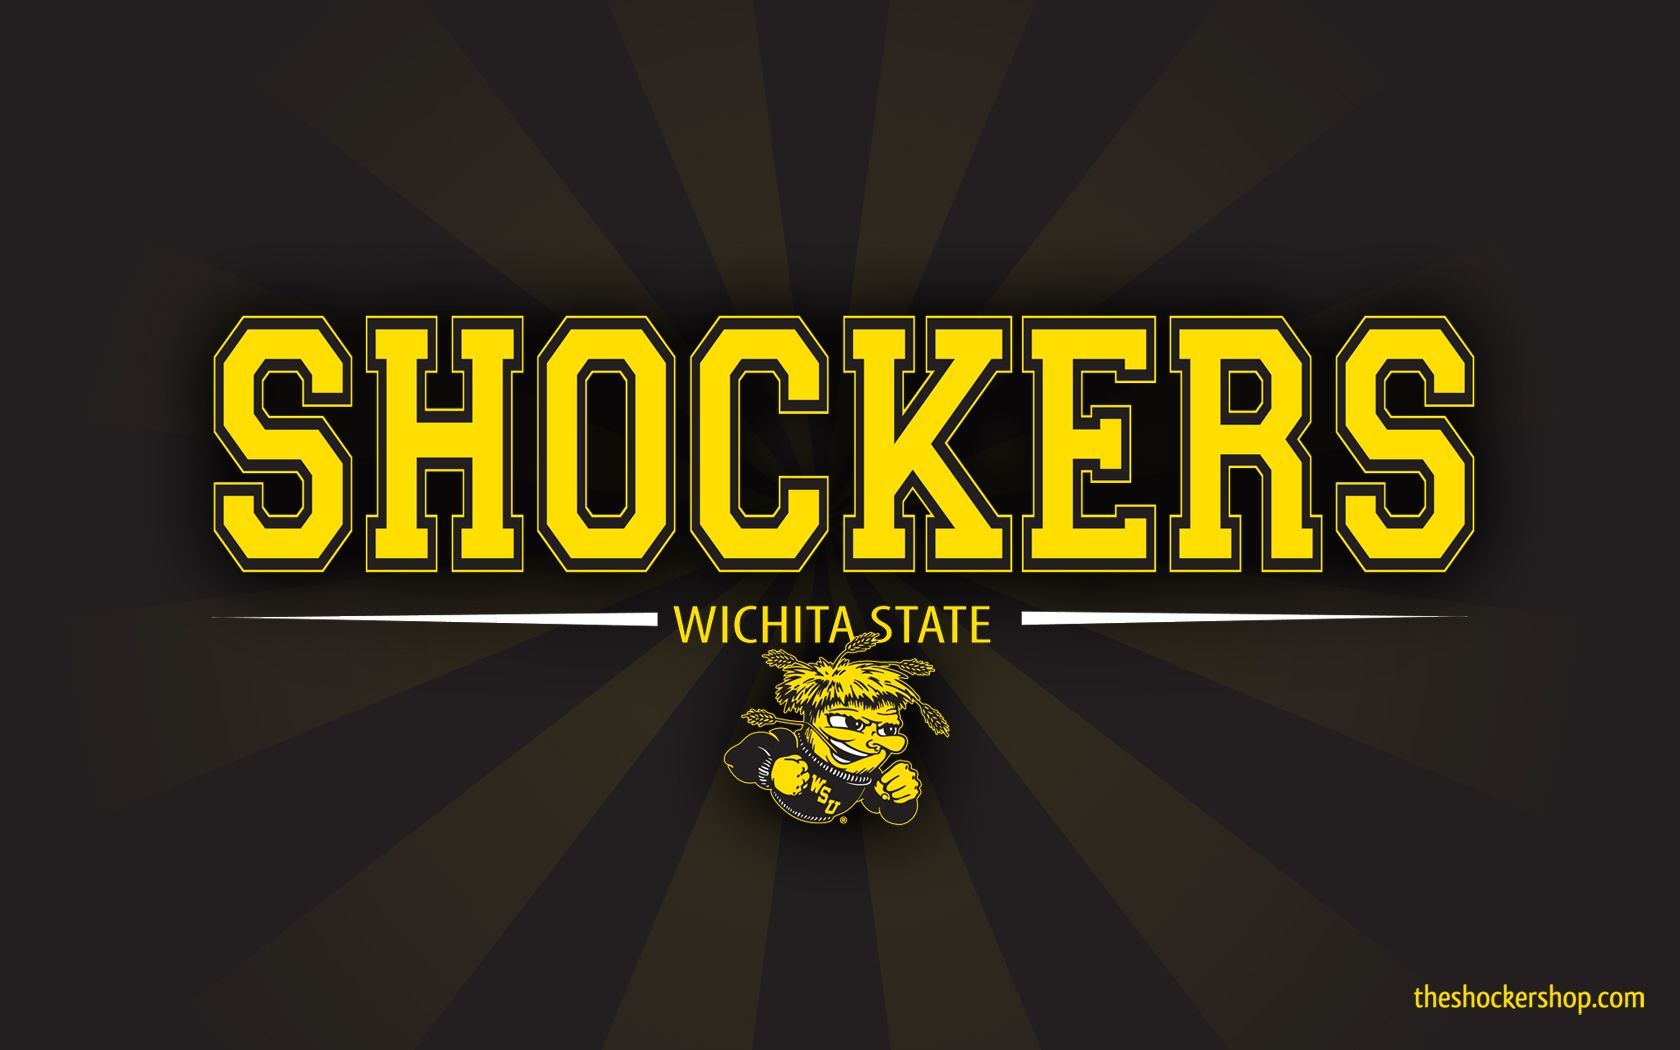 Download Free Wsu Shocker Wallpaper The Shop Shockers. Wsu shockers, Proud of my son, Wichita state university